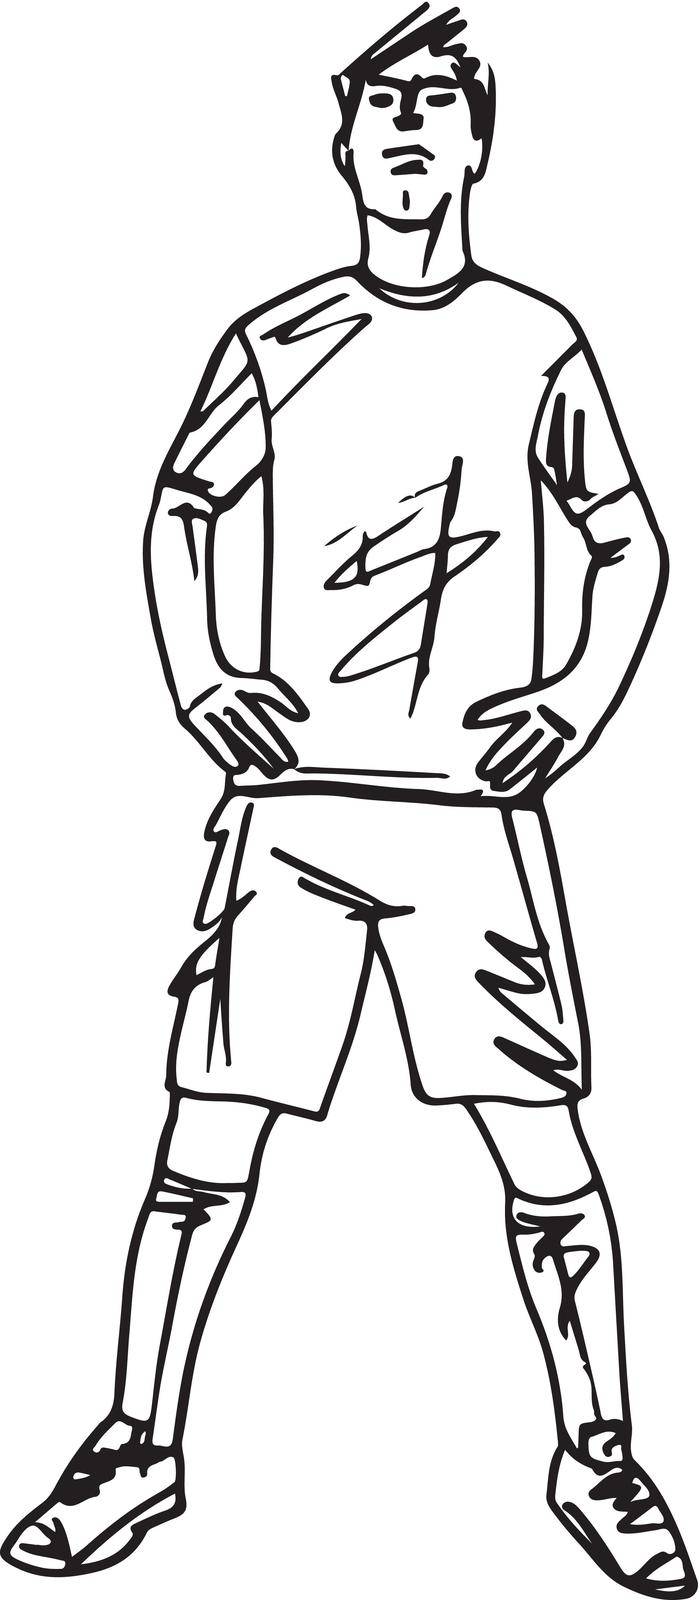 Fashion sketch illustration of man by aroas